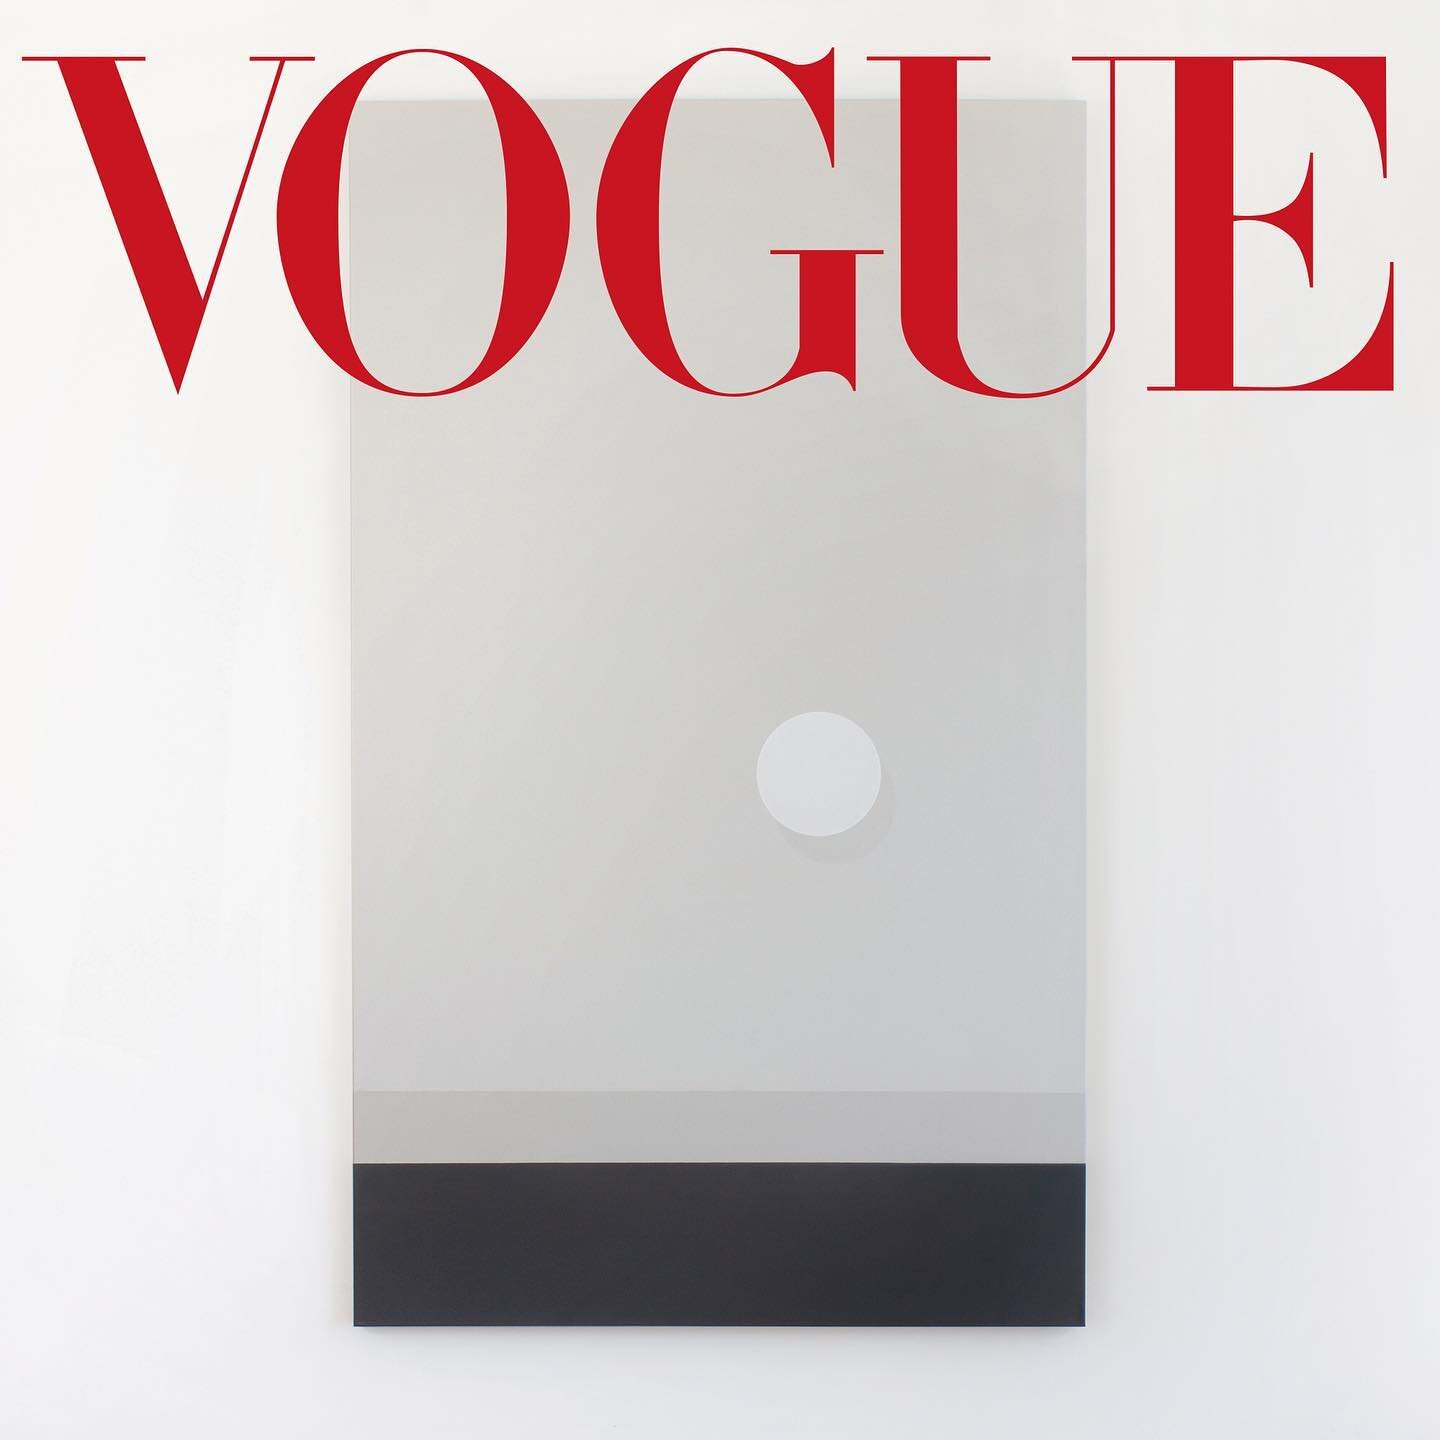 &rsquo;Breeze&rsquo; in Vogue Nov. 2020 Issue. @britishvogue 

@vogue @condenast #vogue #condenast